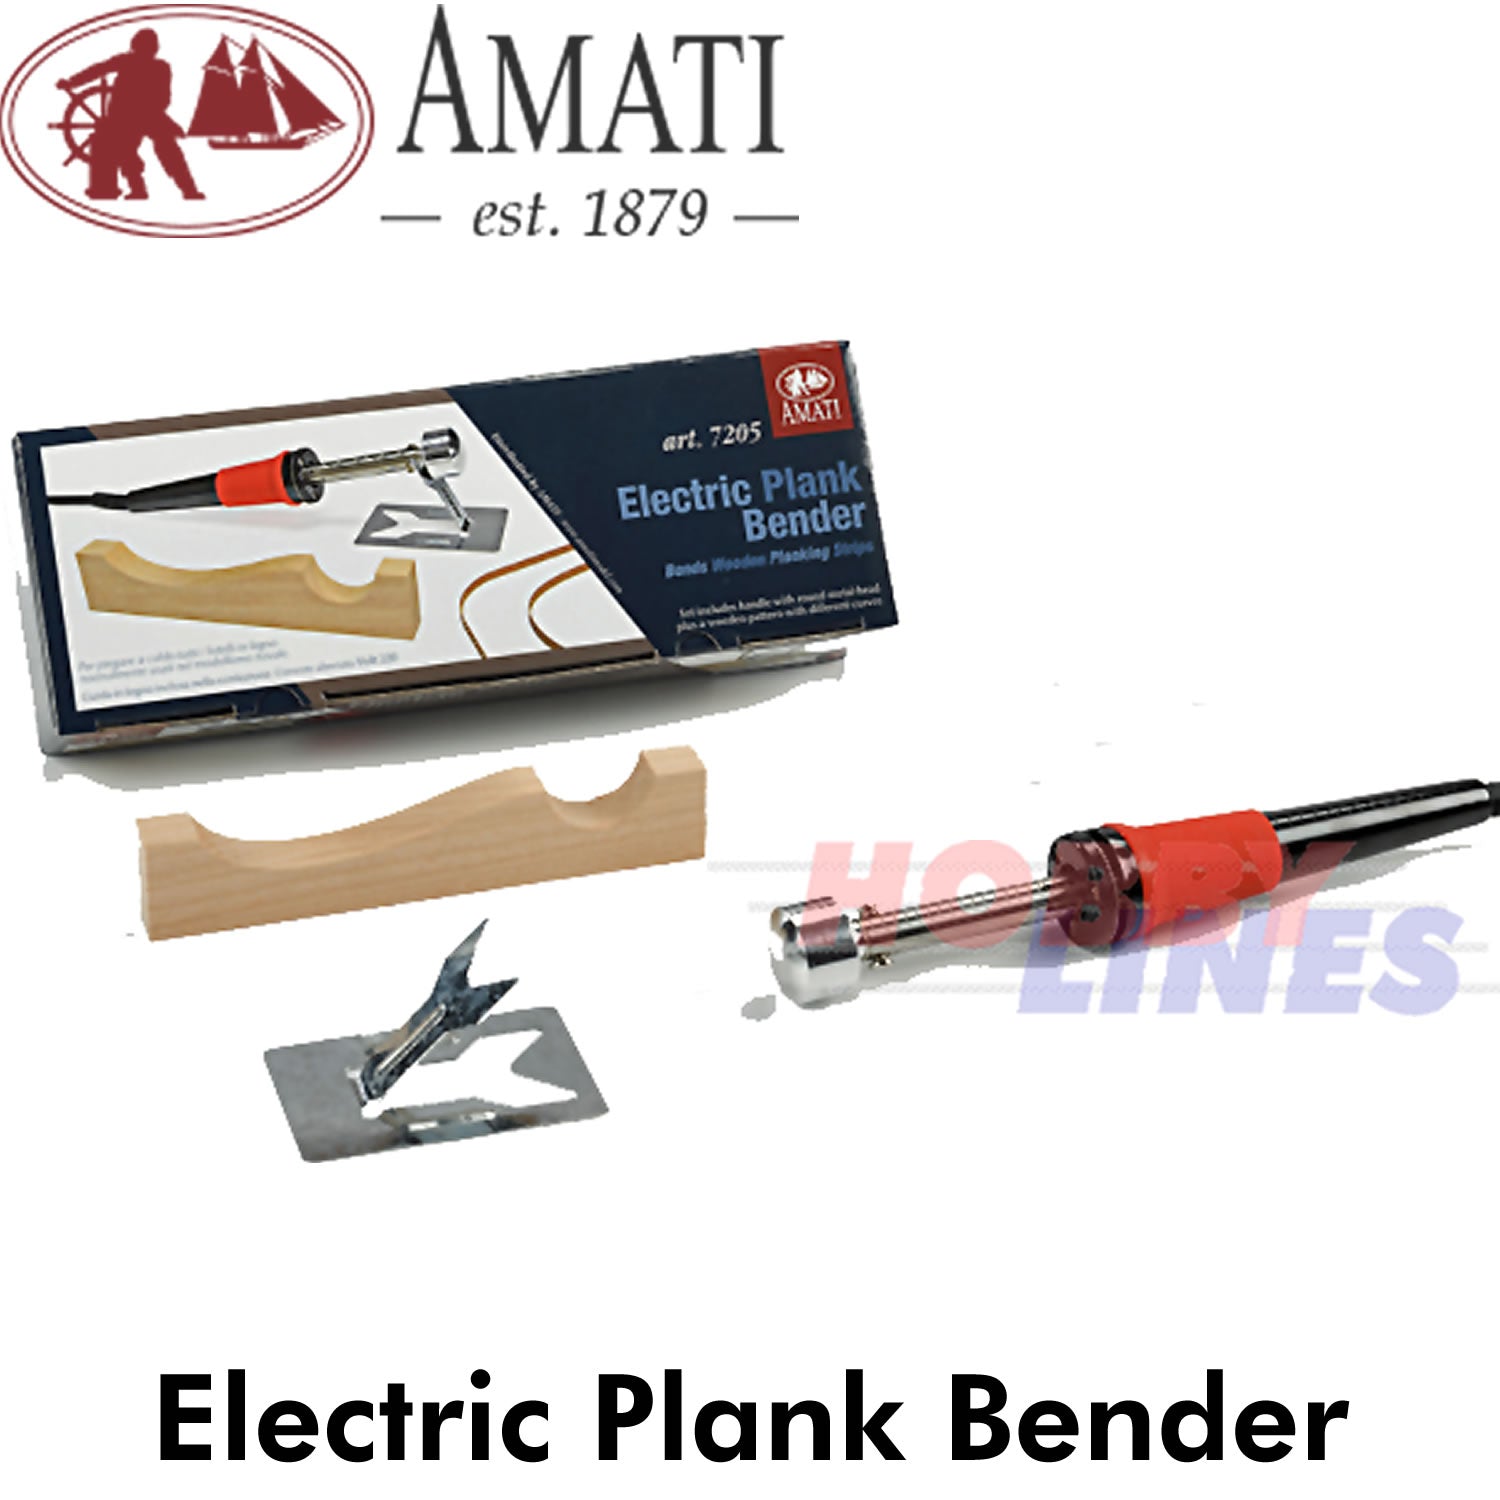 Master Cut (Amati) - Amati Tools - Hobby Tools